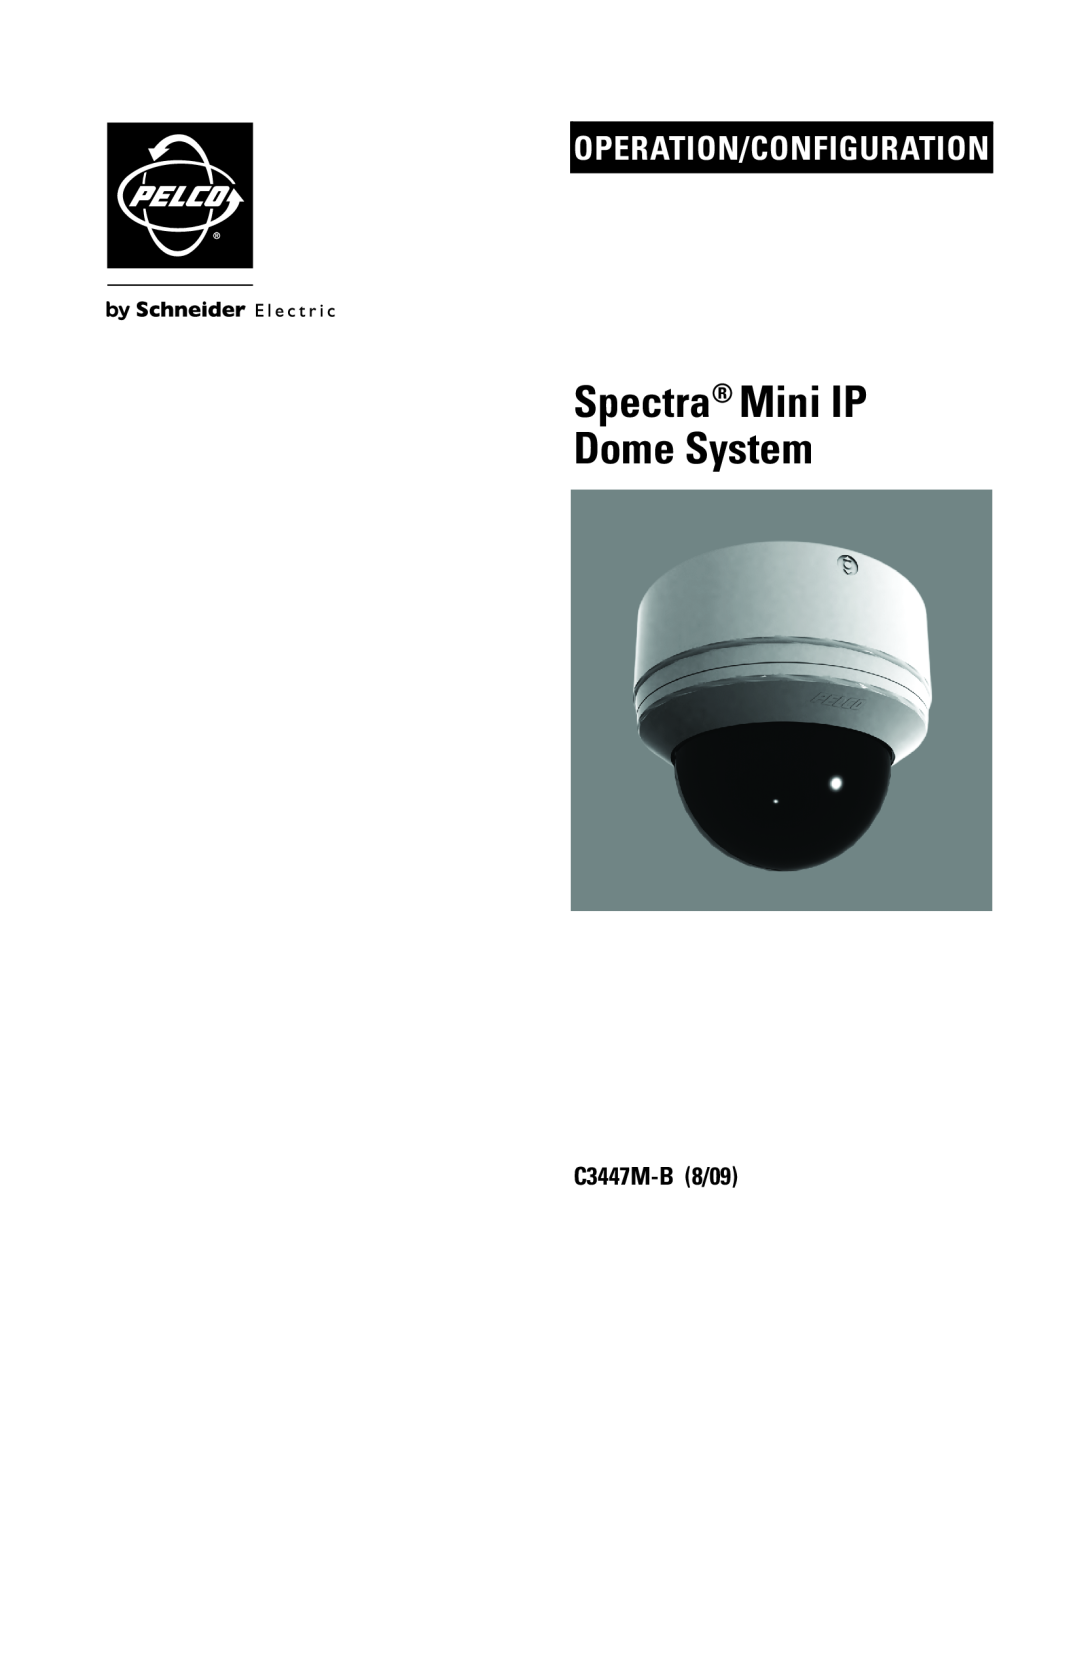 Pelco C3447M-B (8/09) manual Spectra Mini IP Dome System, C3447M-B 8/09, Operation/Configuration 